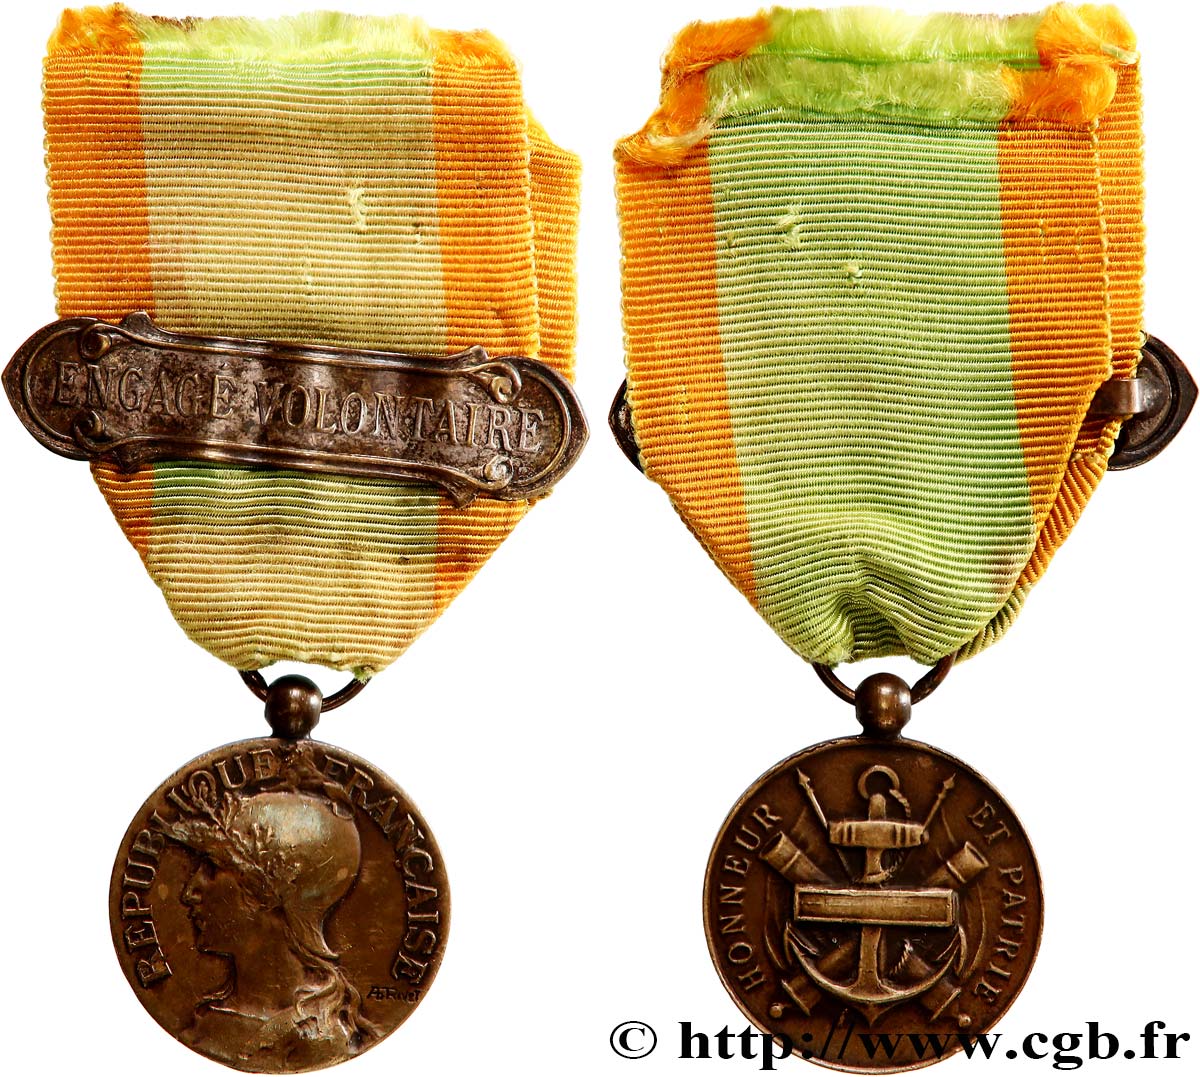 DRITTE FRANZOSISCHE REPUBLIK Médaille, Engagé volontaire SS